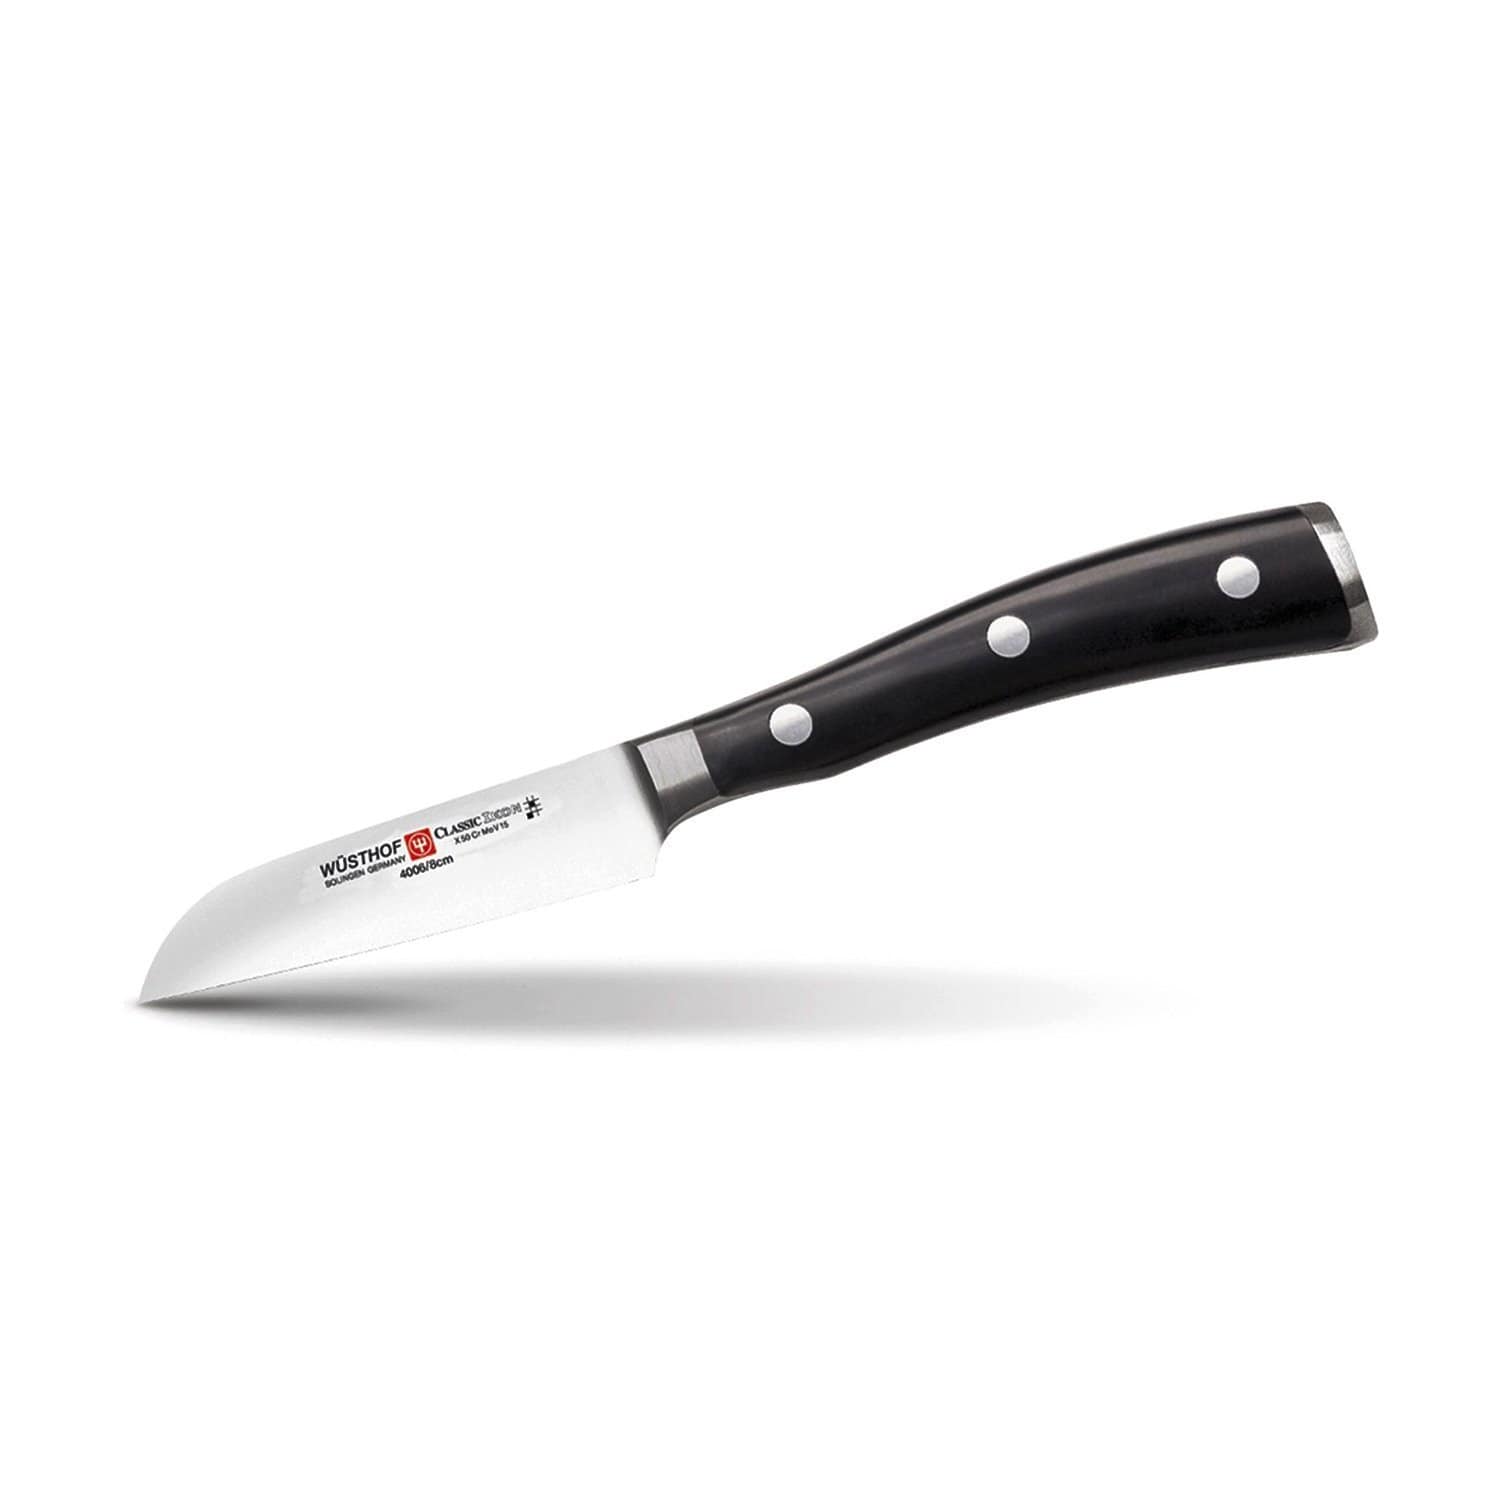 Wusthof Classic Ikon Paring Knife - Black and Silver, 3 inch - 4006-7 - Jashanmal Home